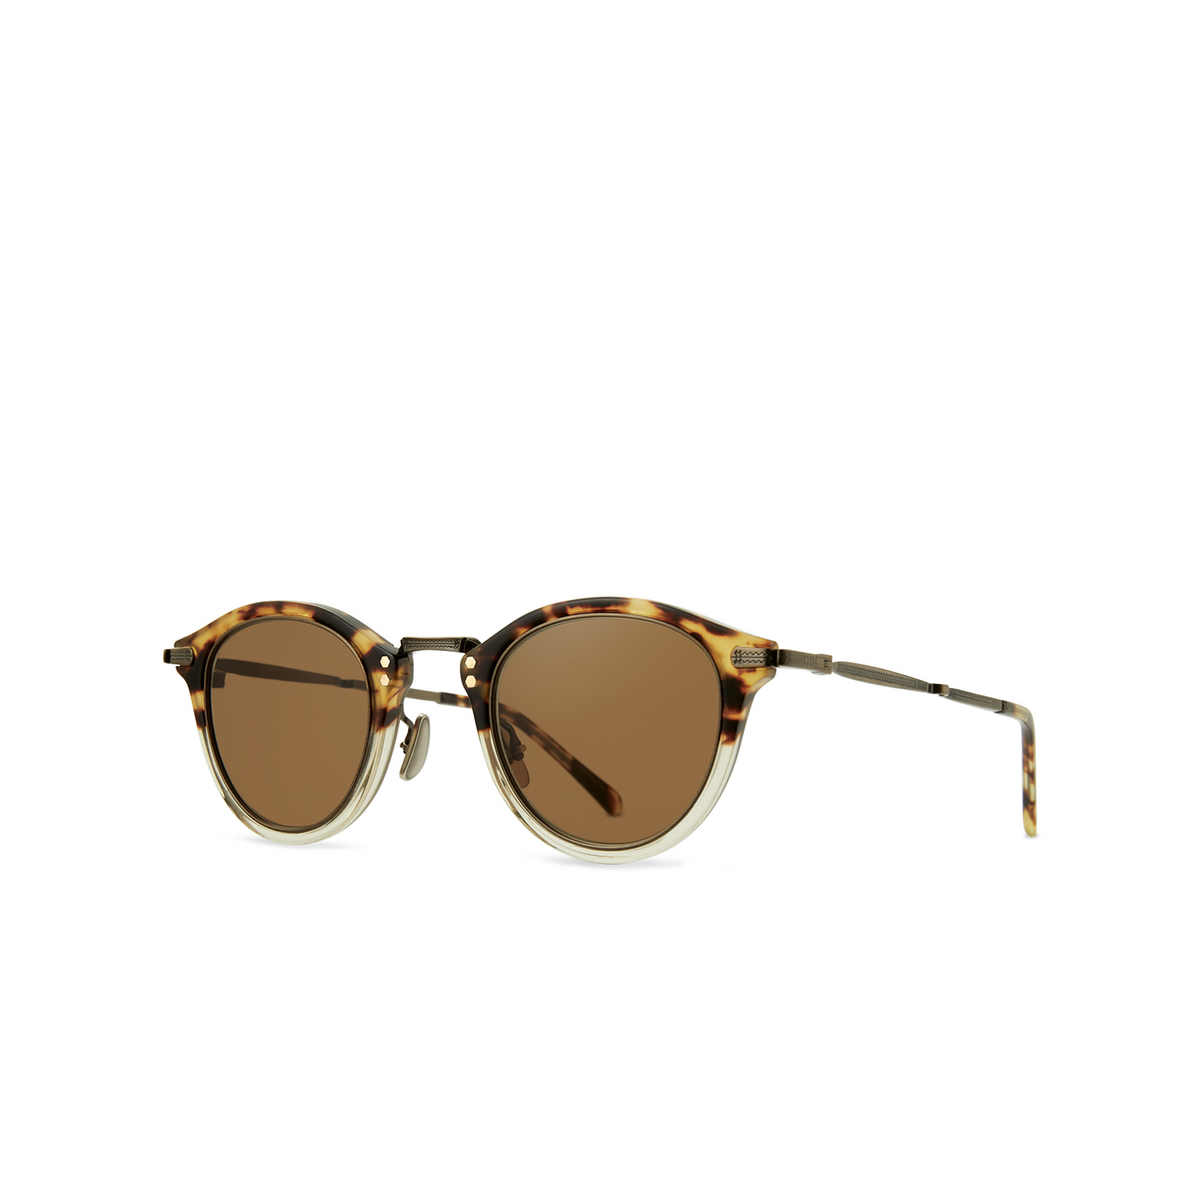 Mr. Leight STANLEY S Sunglasses DTORT-ATG-TRT/BRN Demi Tortoise-Antique Gold-Tortoise - three-quarters view